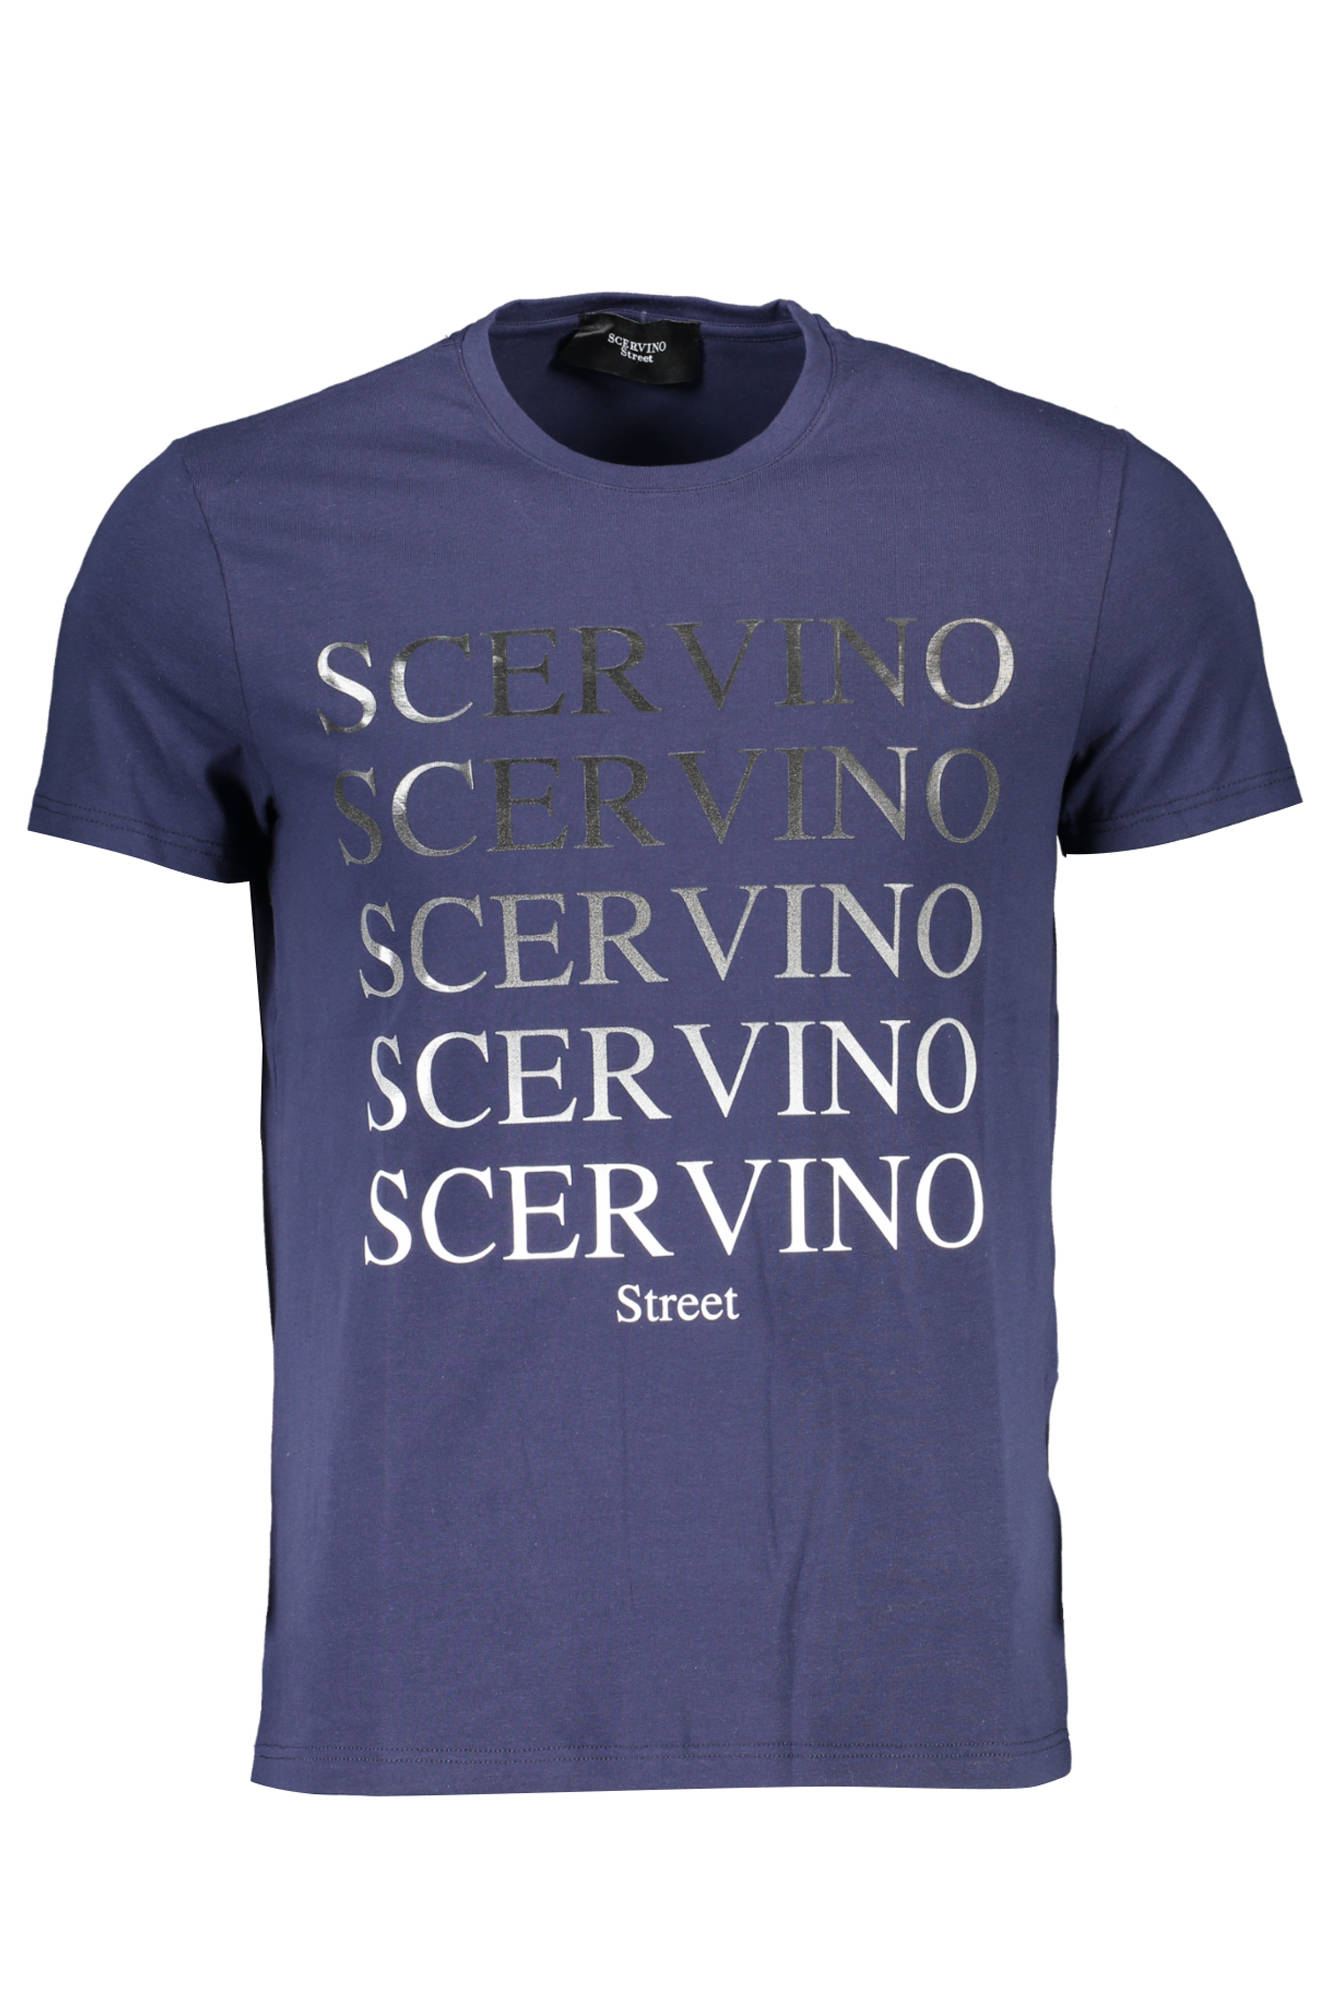 Tričko SCERVINO STREET tričko s krátkým rukávem BLU